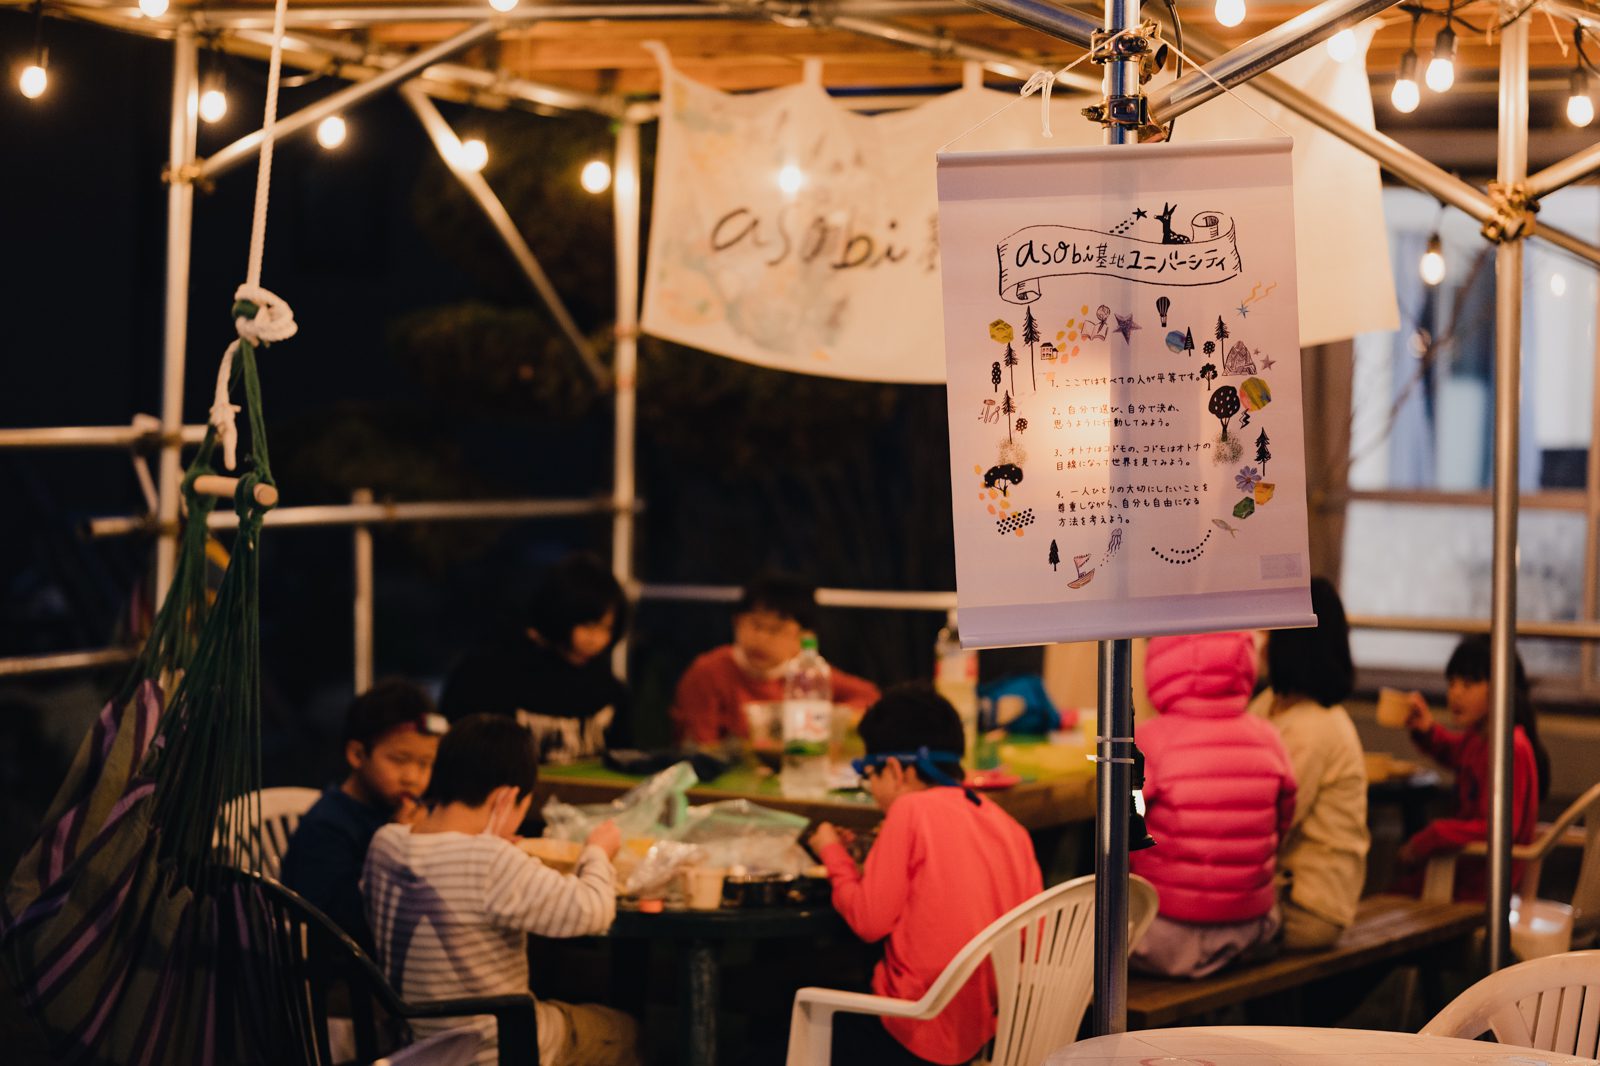 asobi基地ユニバーシティのプログラム「パラダイスデー」の夜の食事の様子